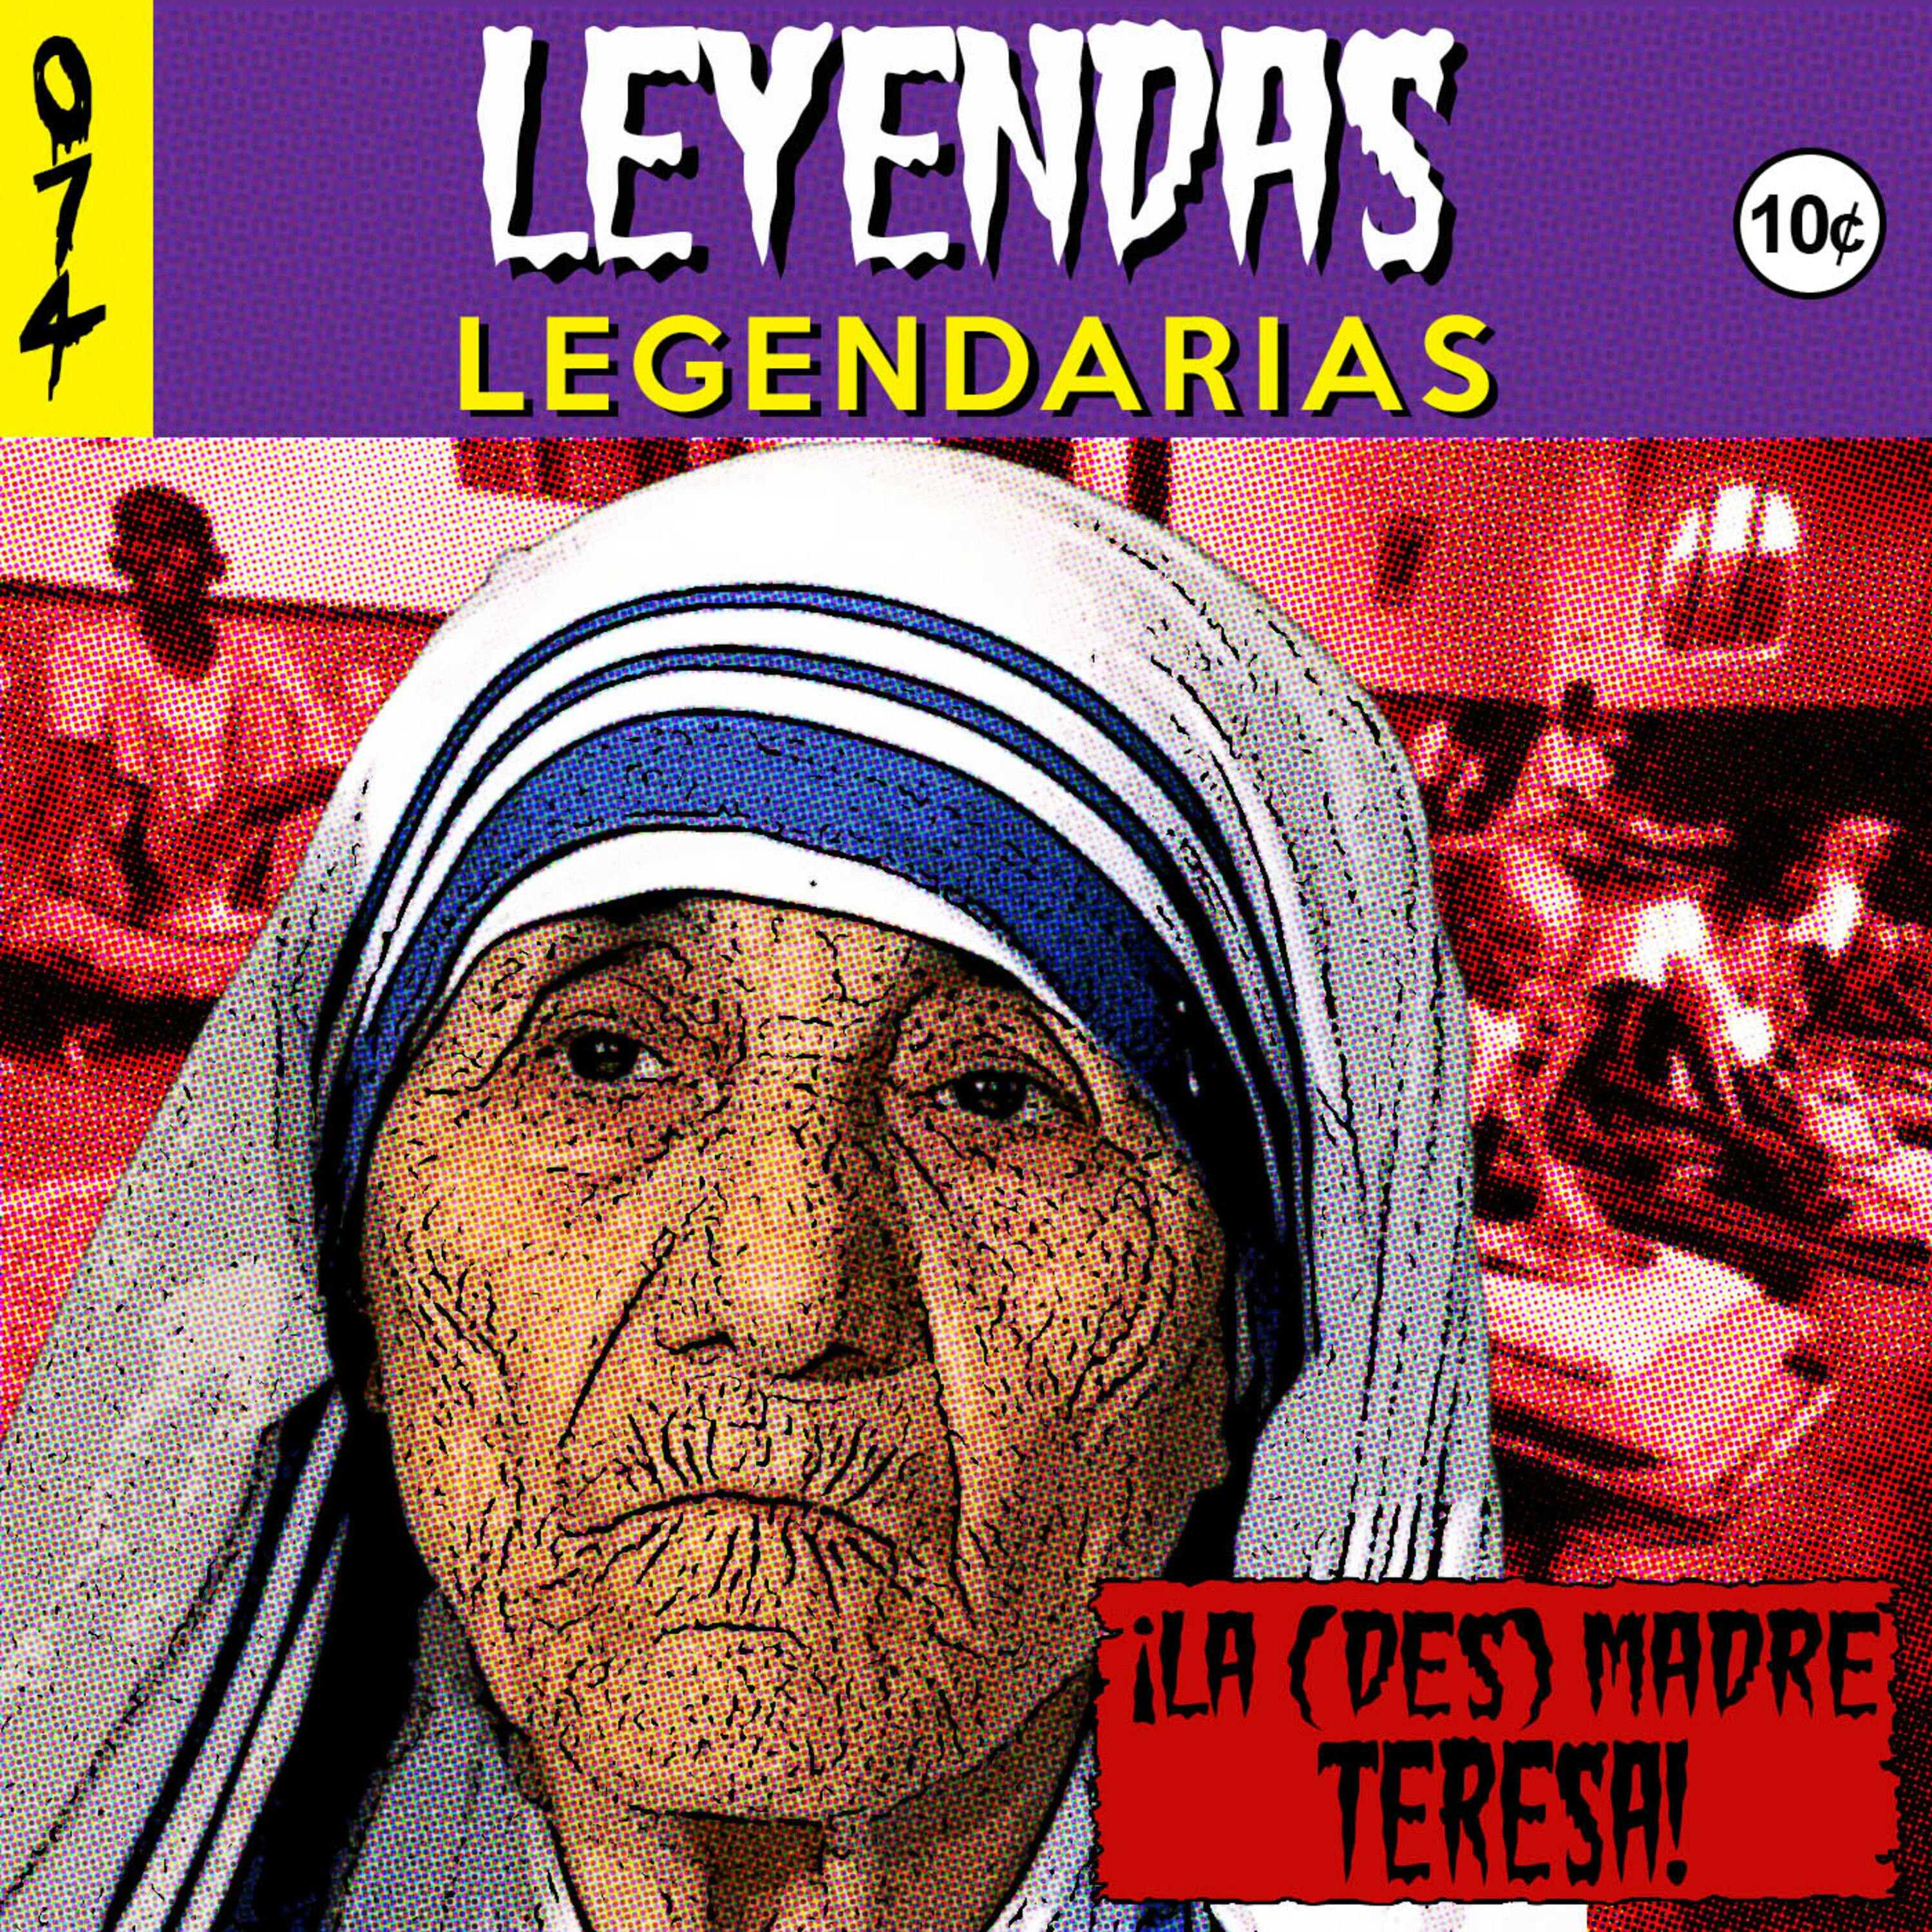 E74: La (des)Madre Teresa